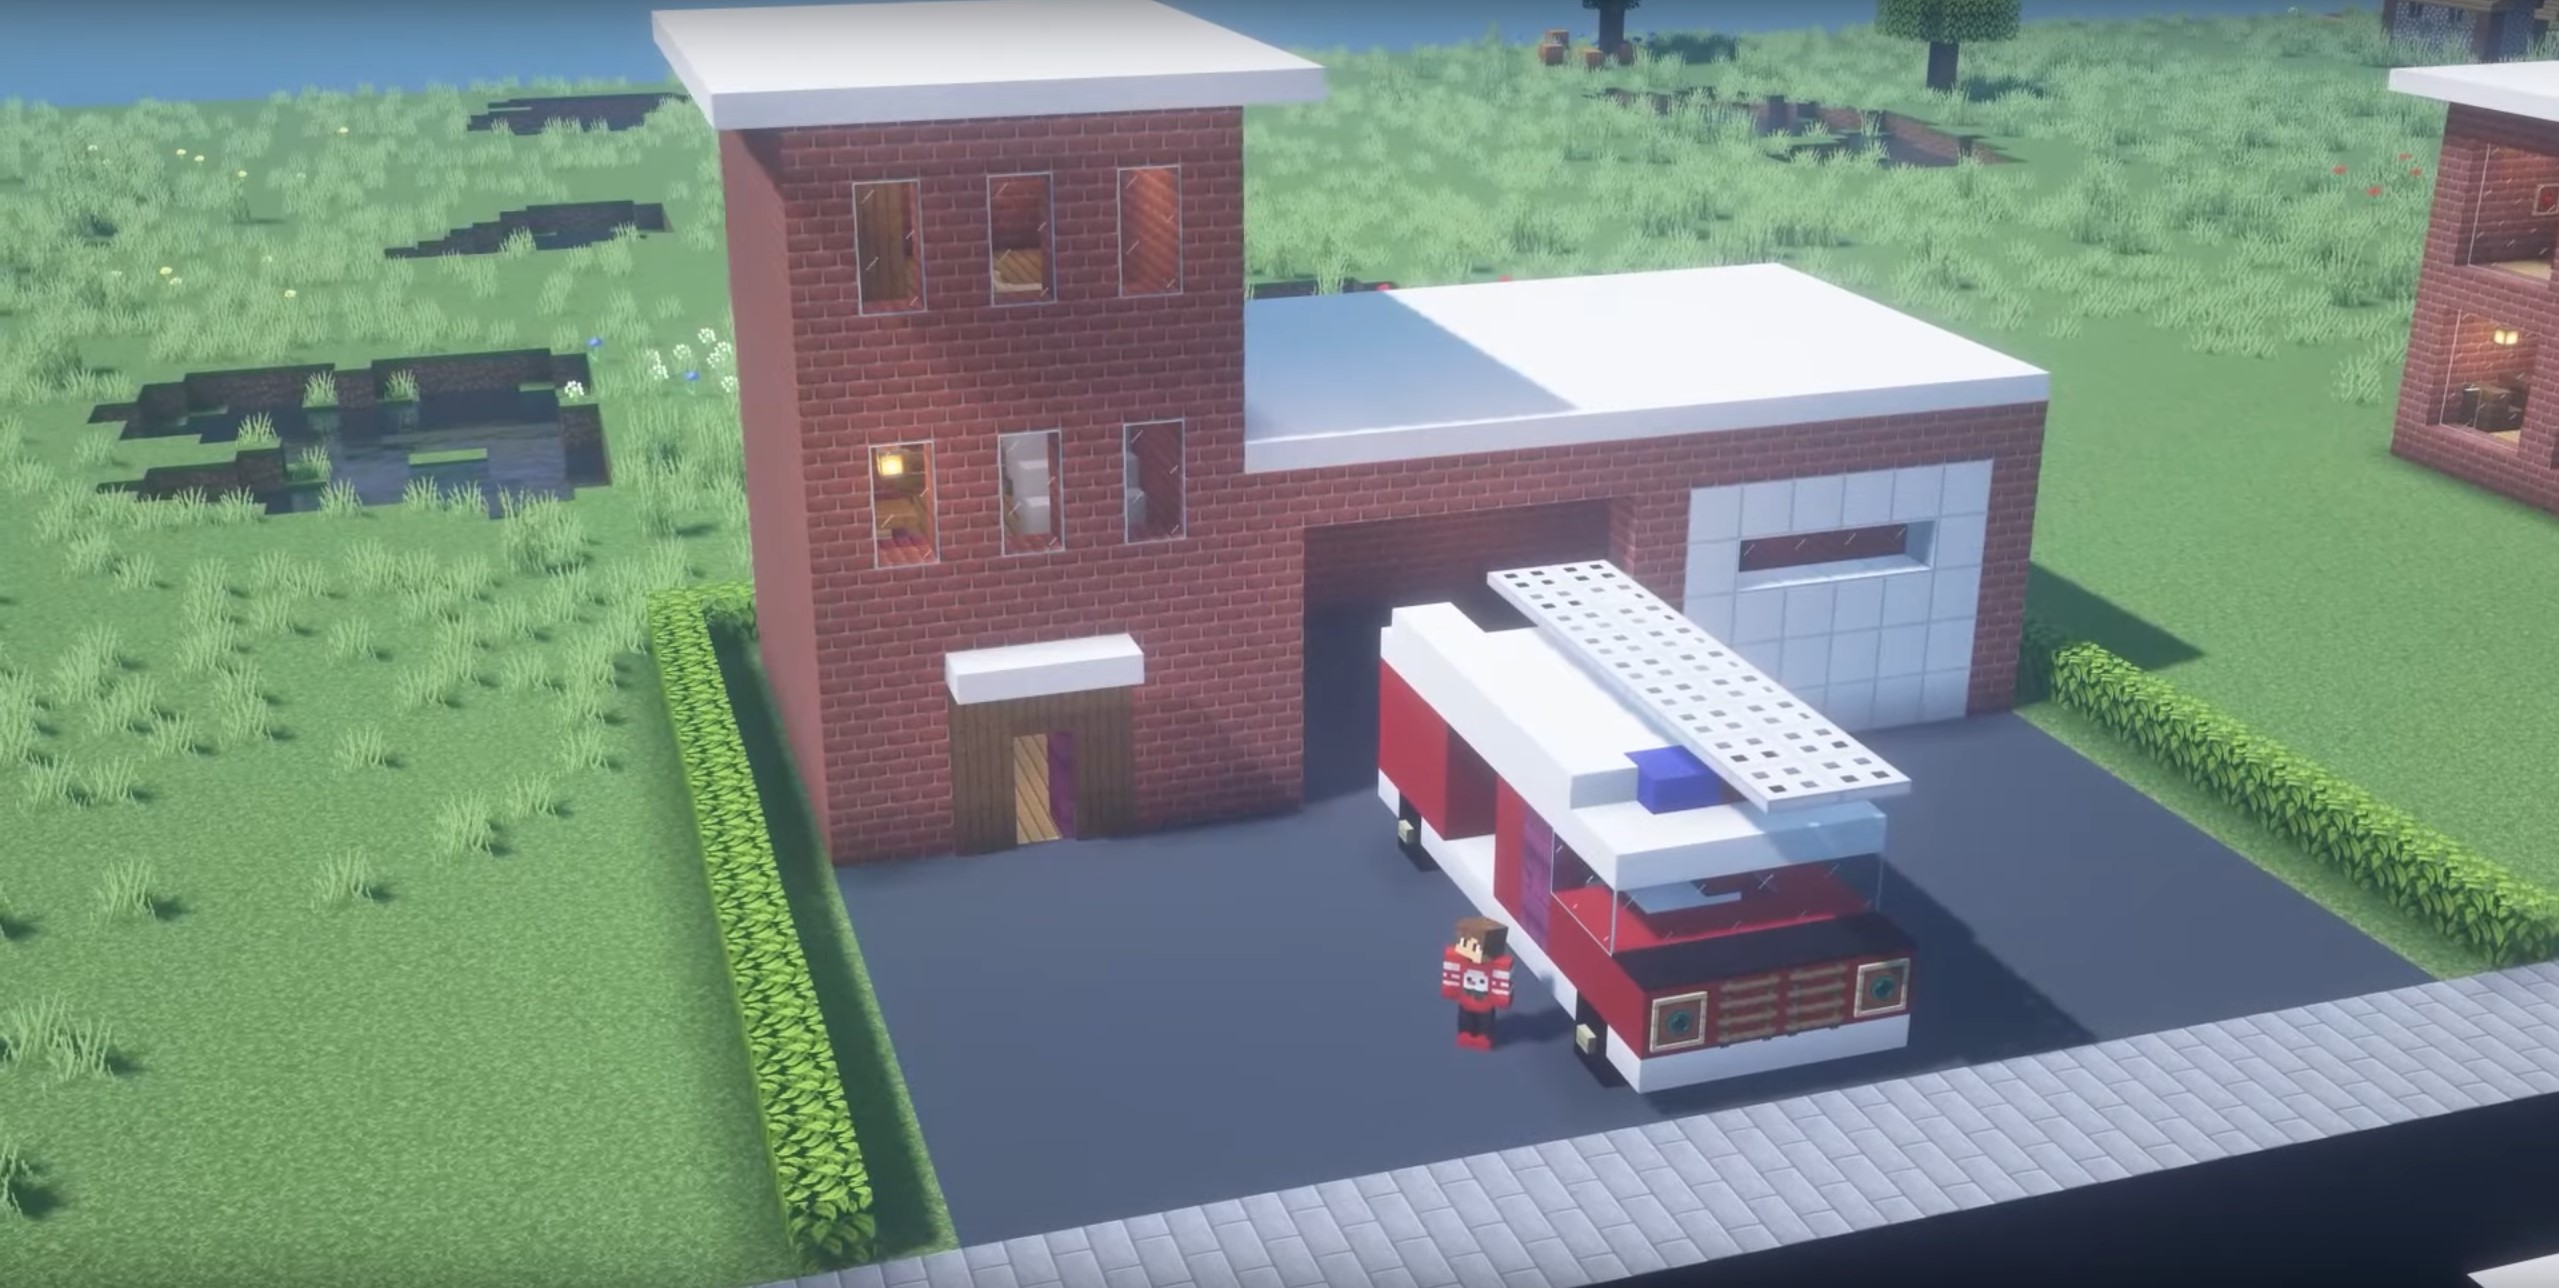 Fire station minecraft building idea